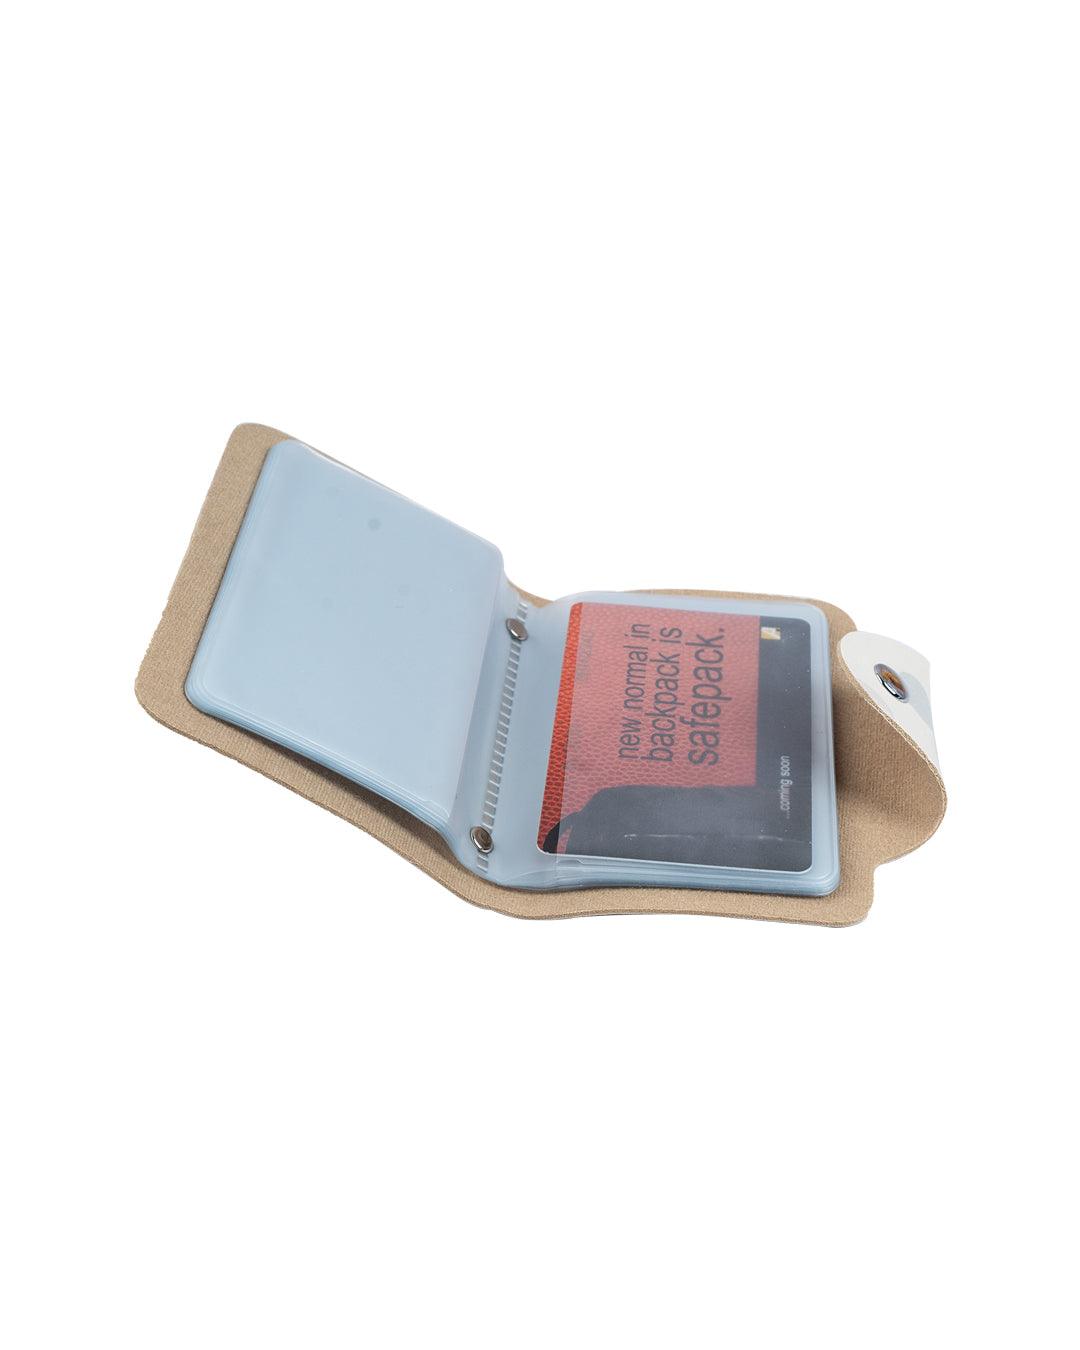 Multi Card Holder, Wallet, Grey, PU Leather, - MARKET 99